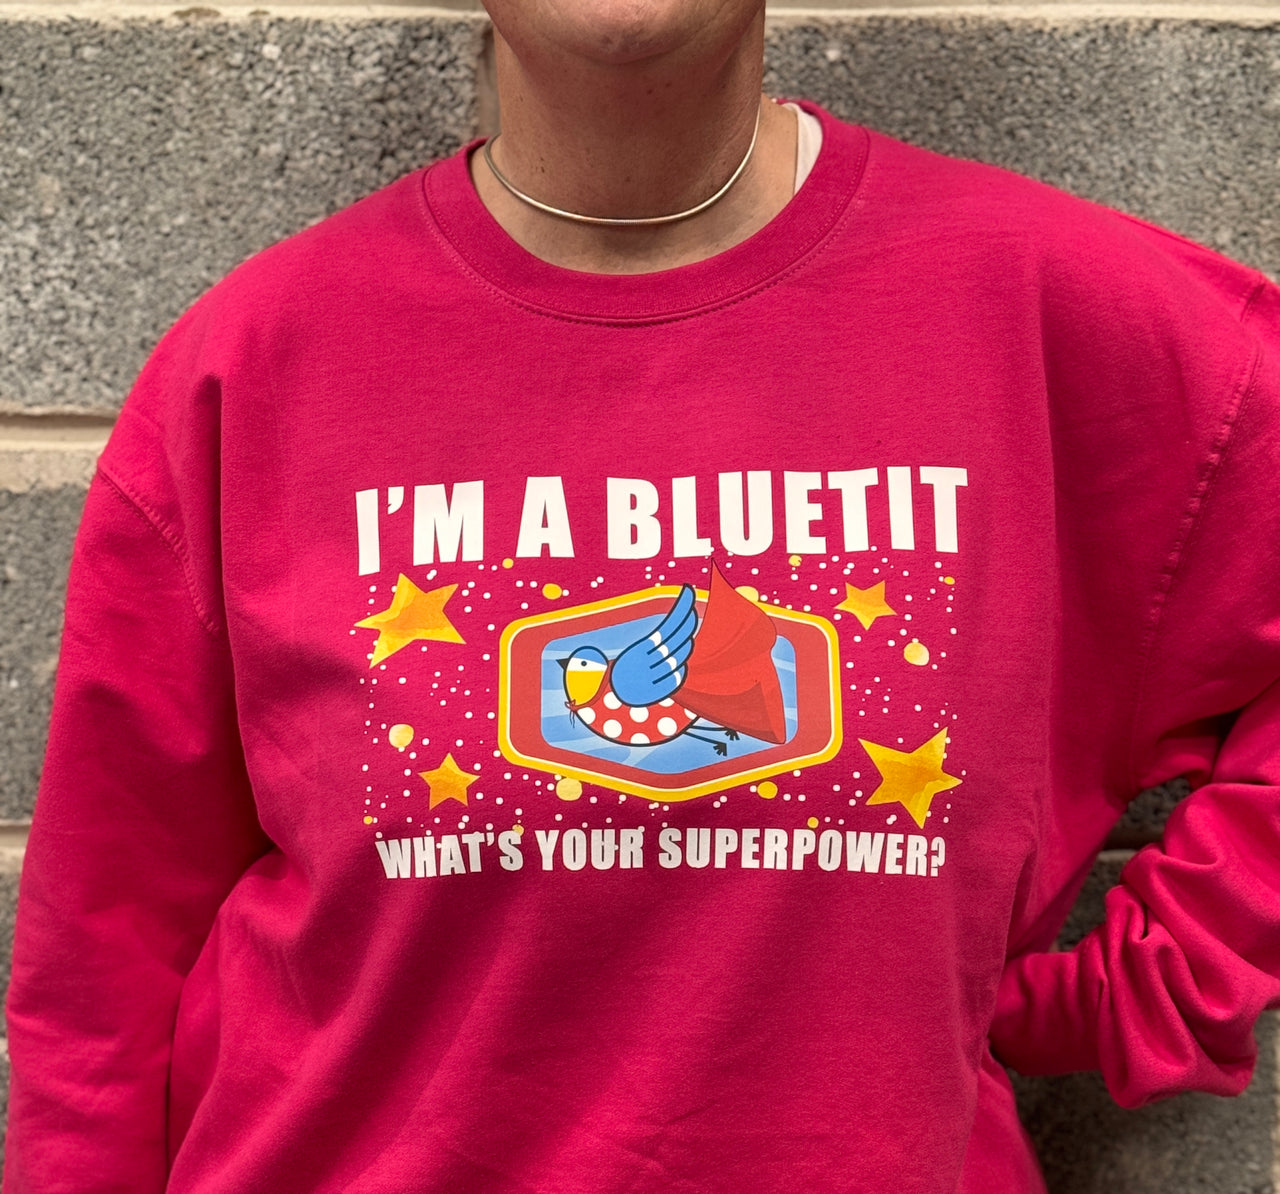 Bluetit Sweatshirt - I'm a Bluetit What's Your Superpower?